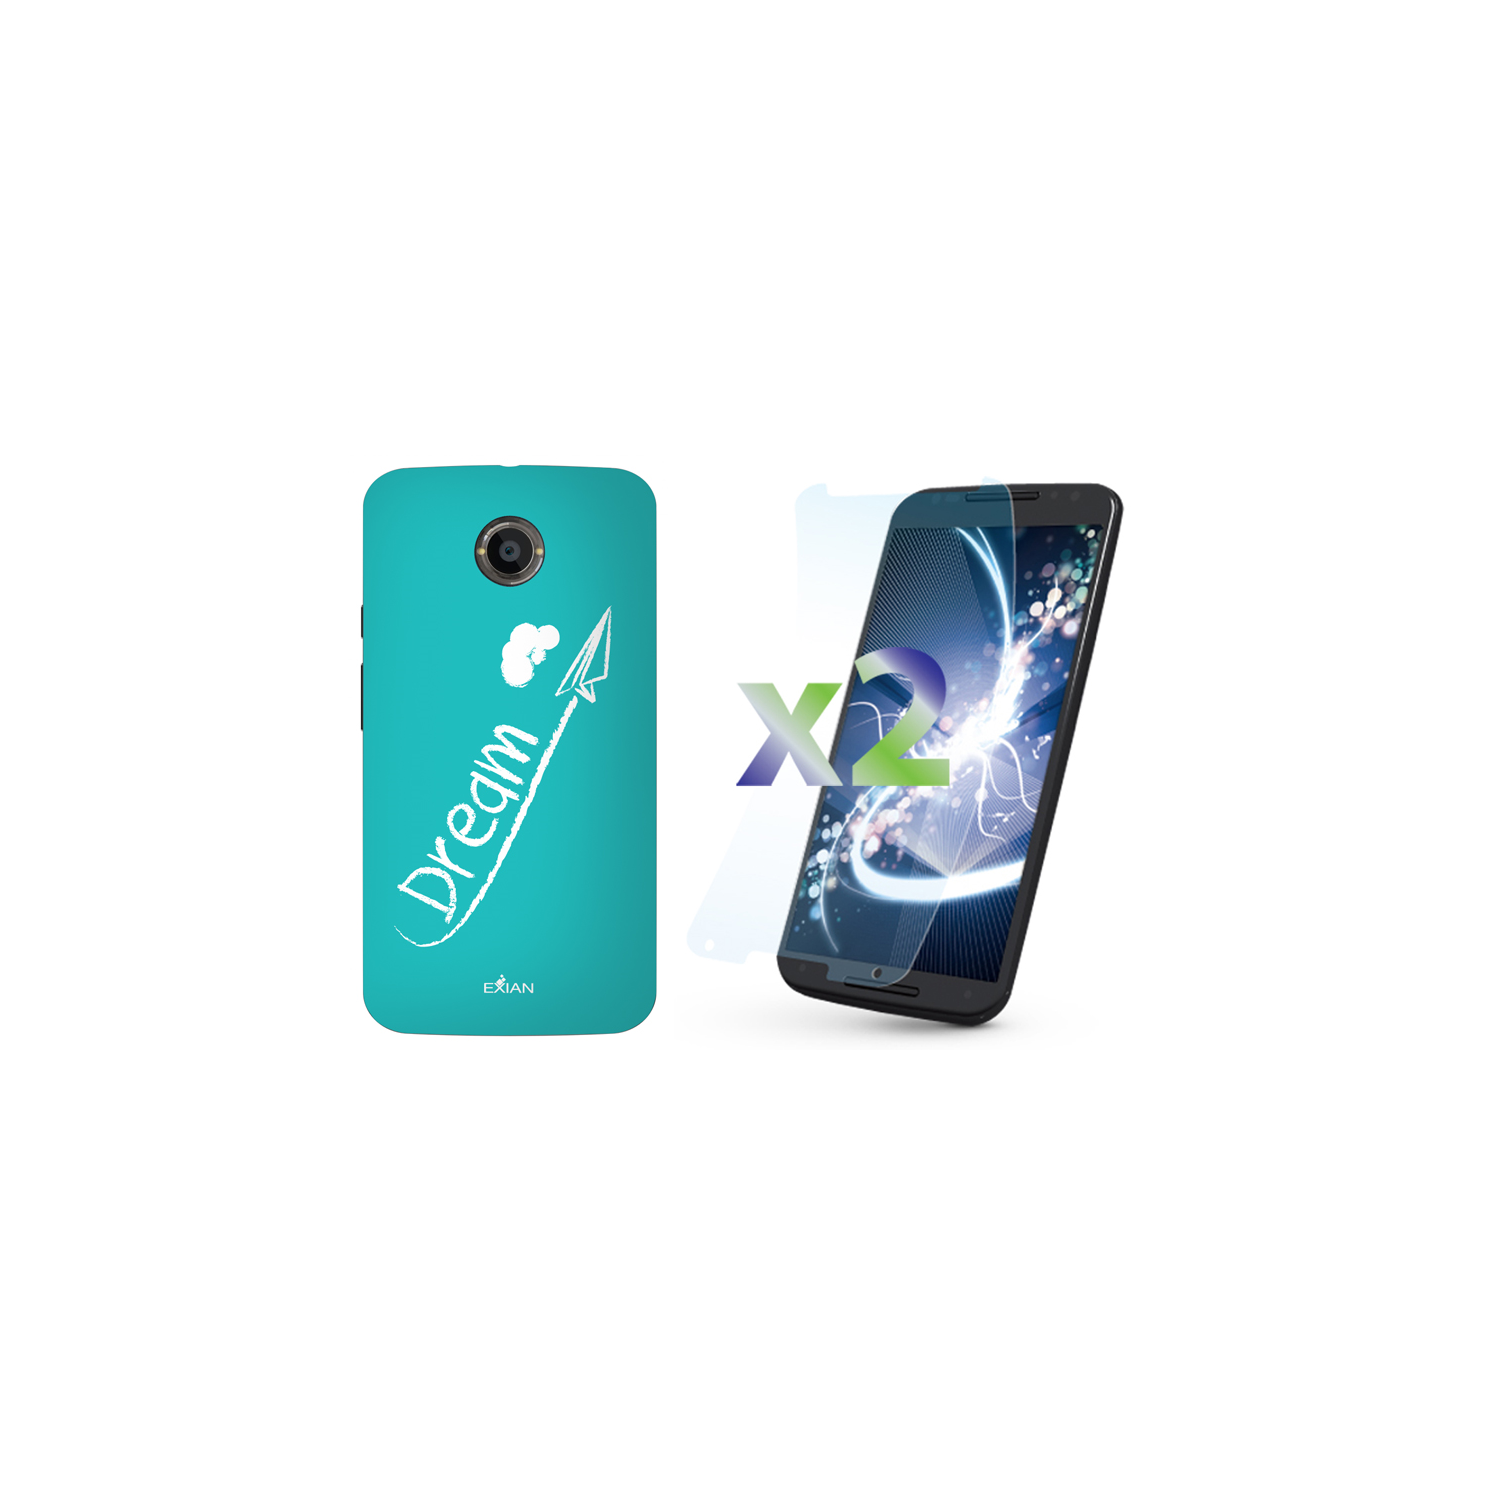 Exian Motorola Moto X2(2nd Gen) Screen Protectors X 2 and TPU Case Exian Design Dream on Teal